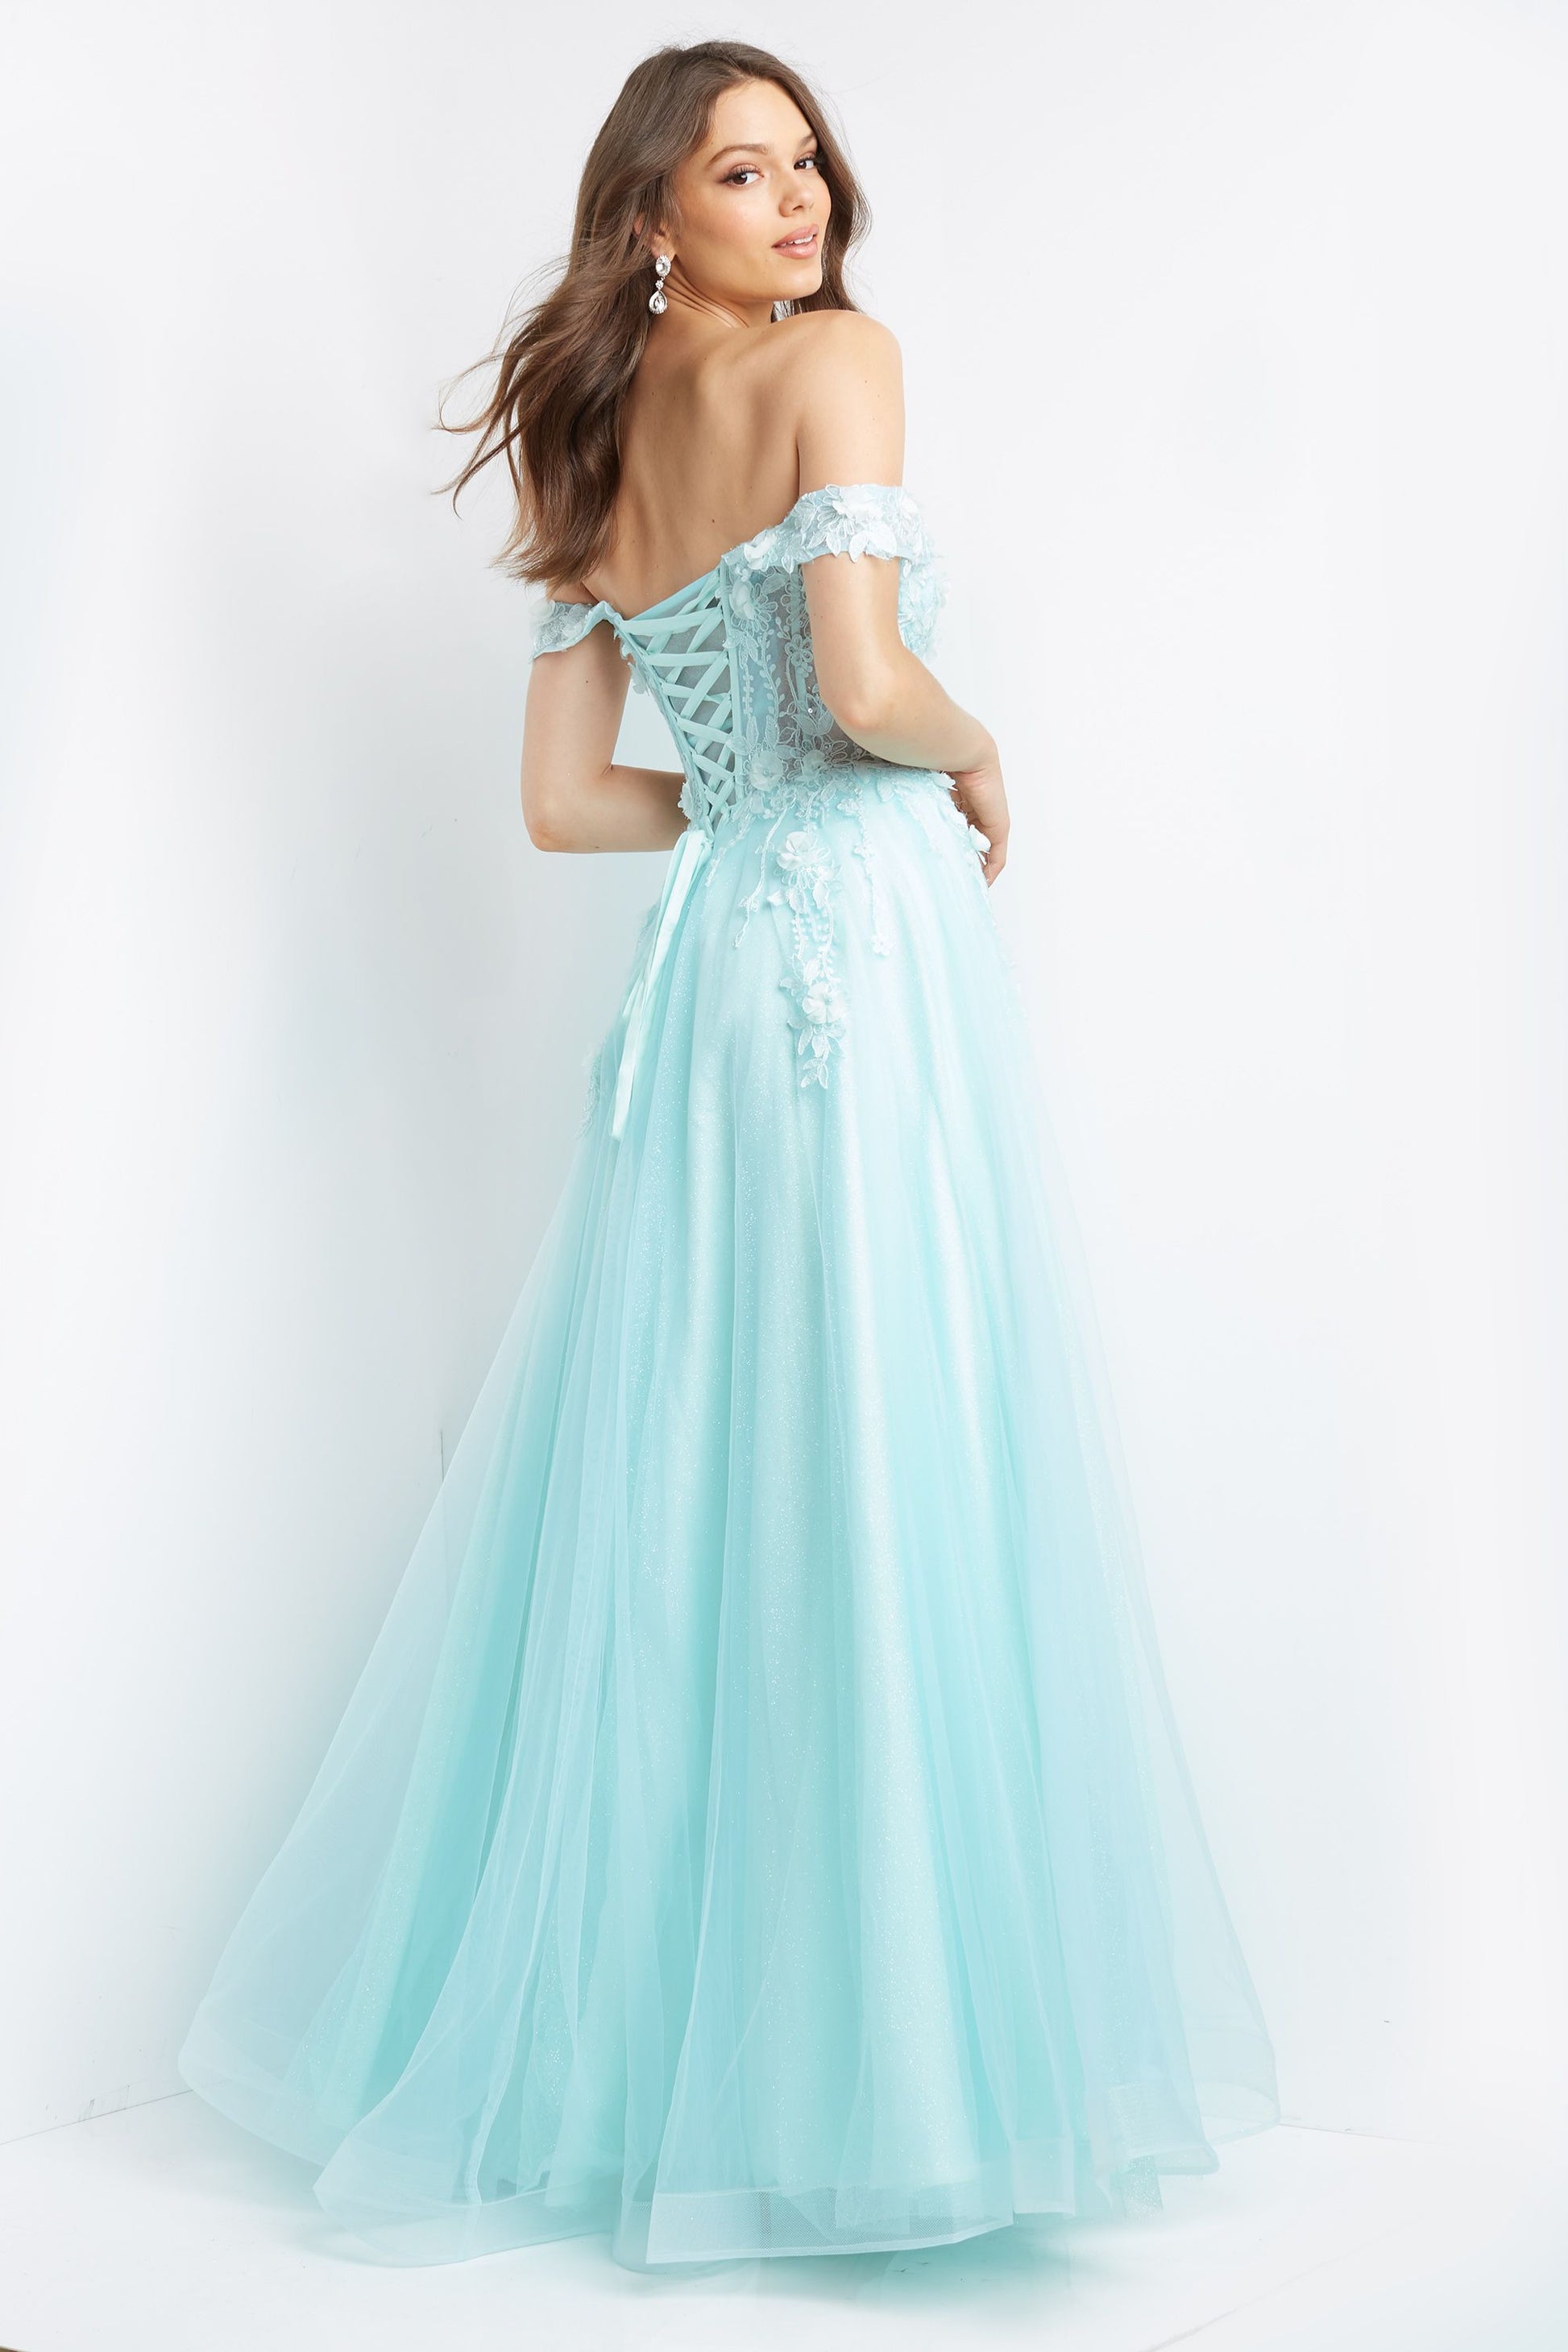 Jovani JVN08295 Prom Dress off the shoulder 3D lace corset A line flowy  glitter tulle